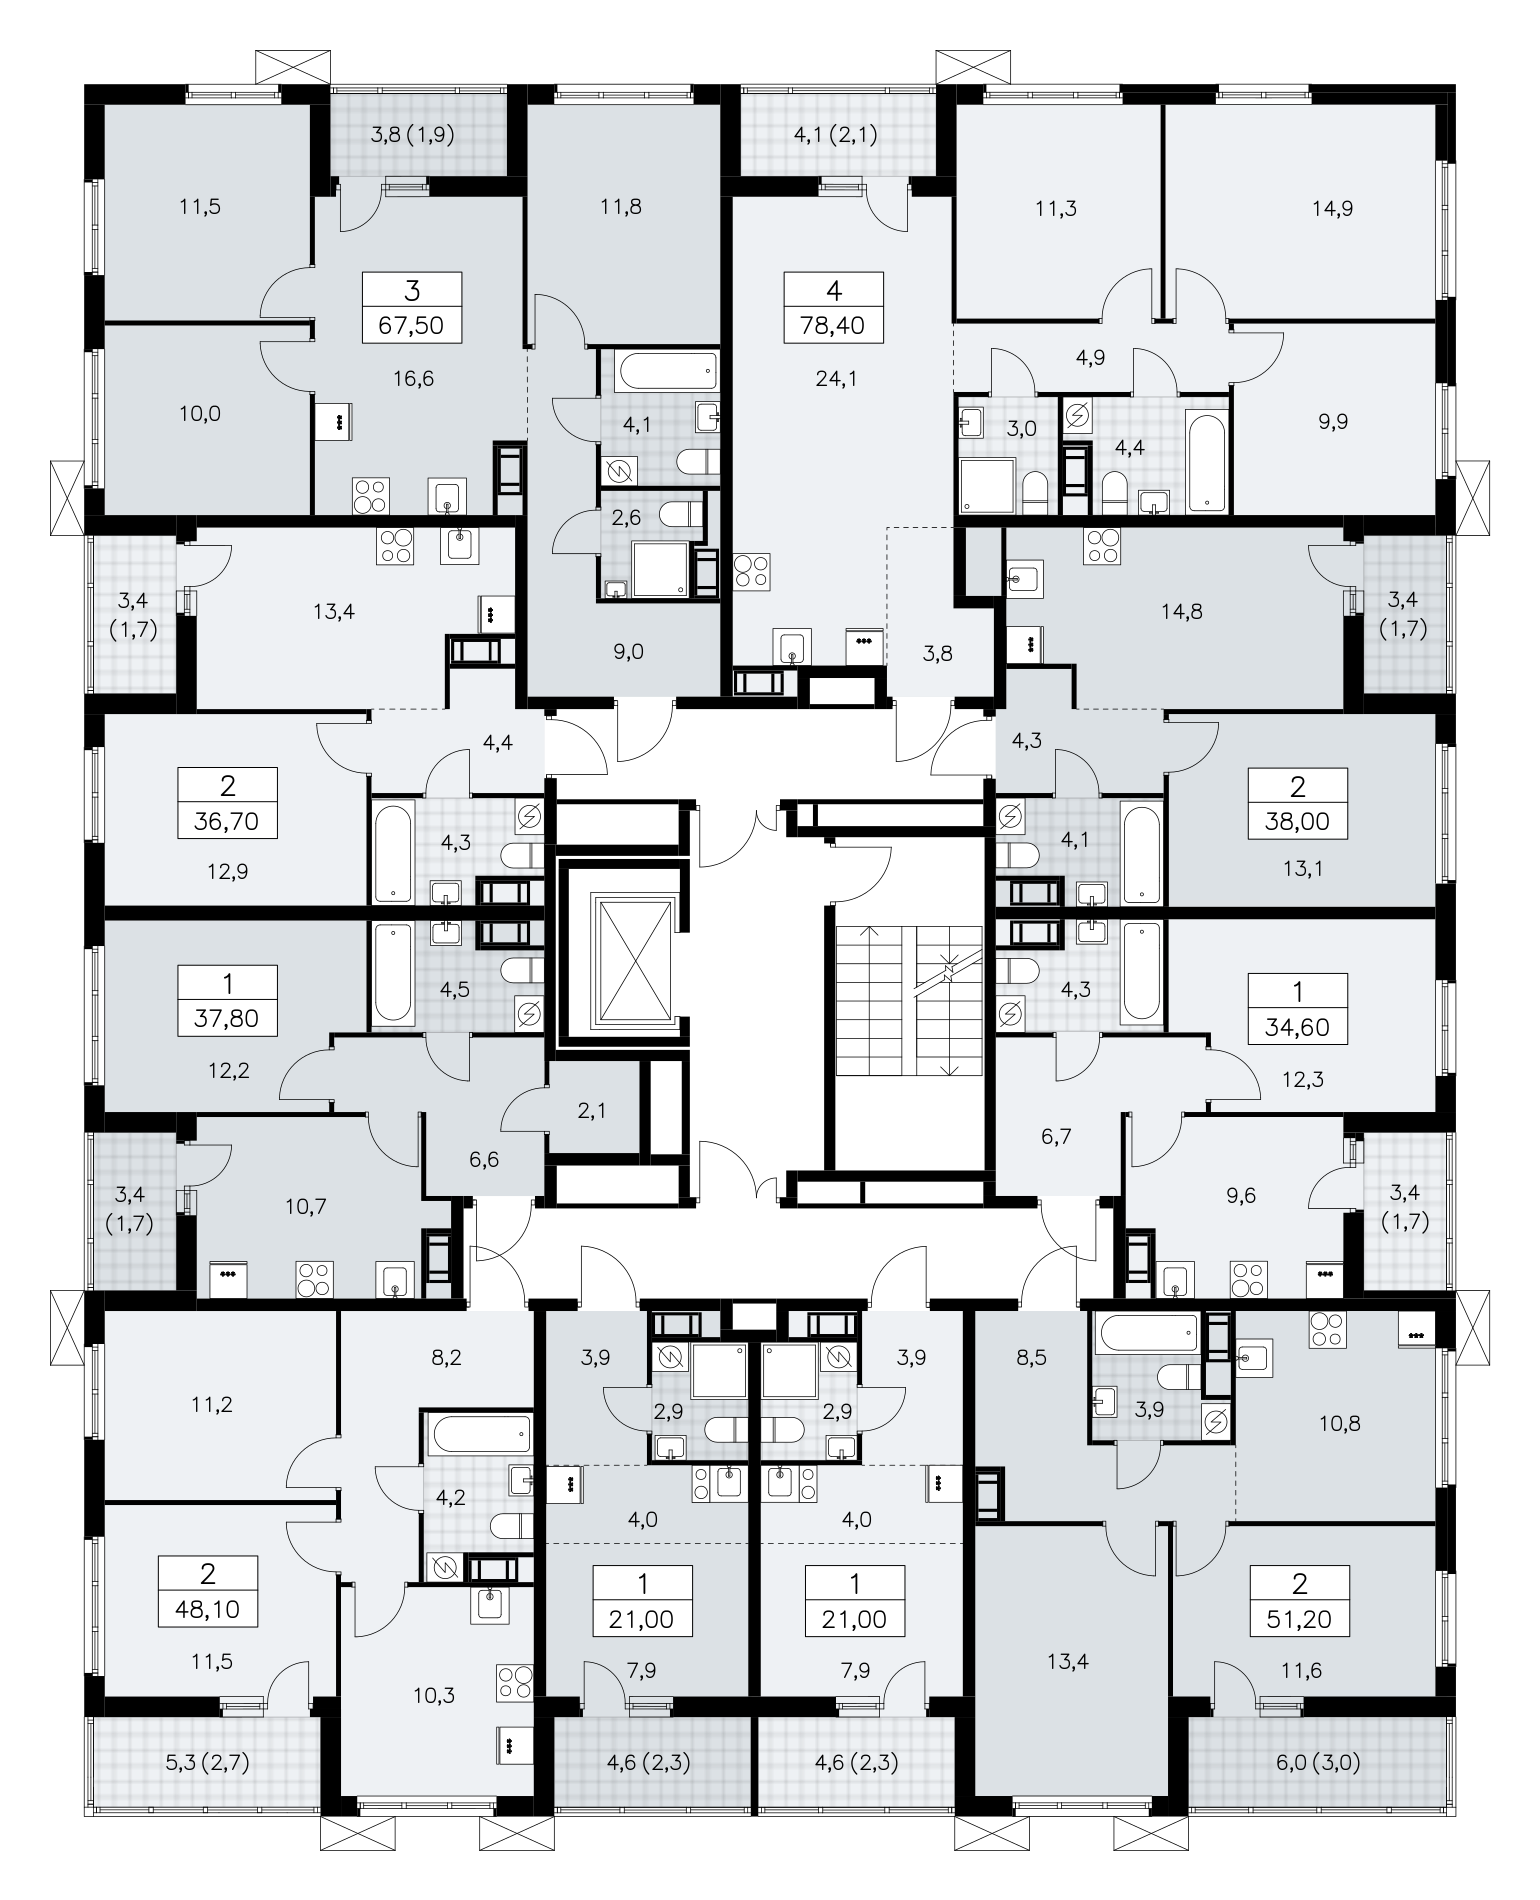 4-комнатная (Евро) квартира, 67.5 м² - планировка этажа